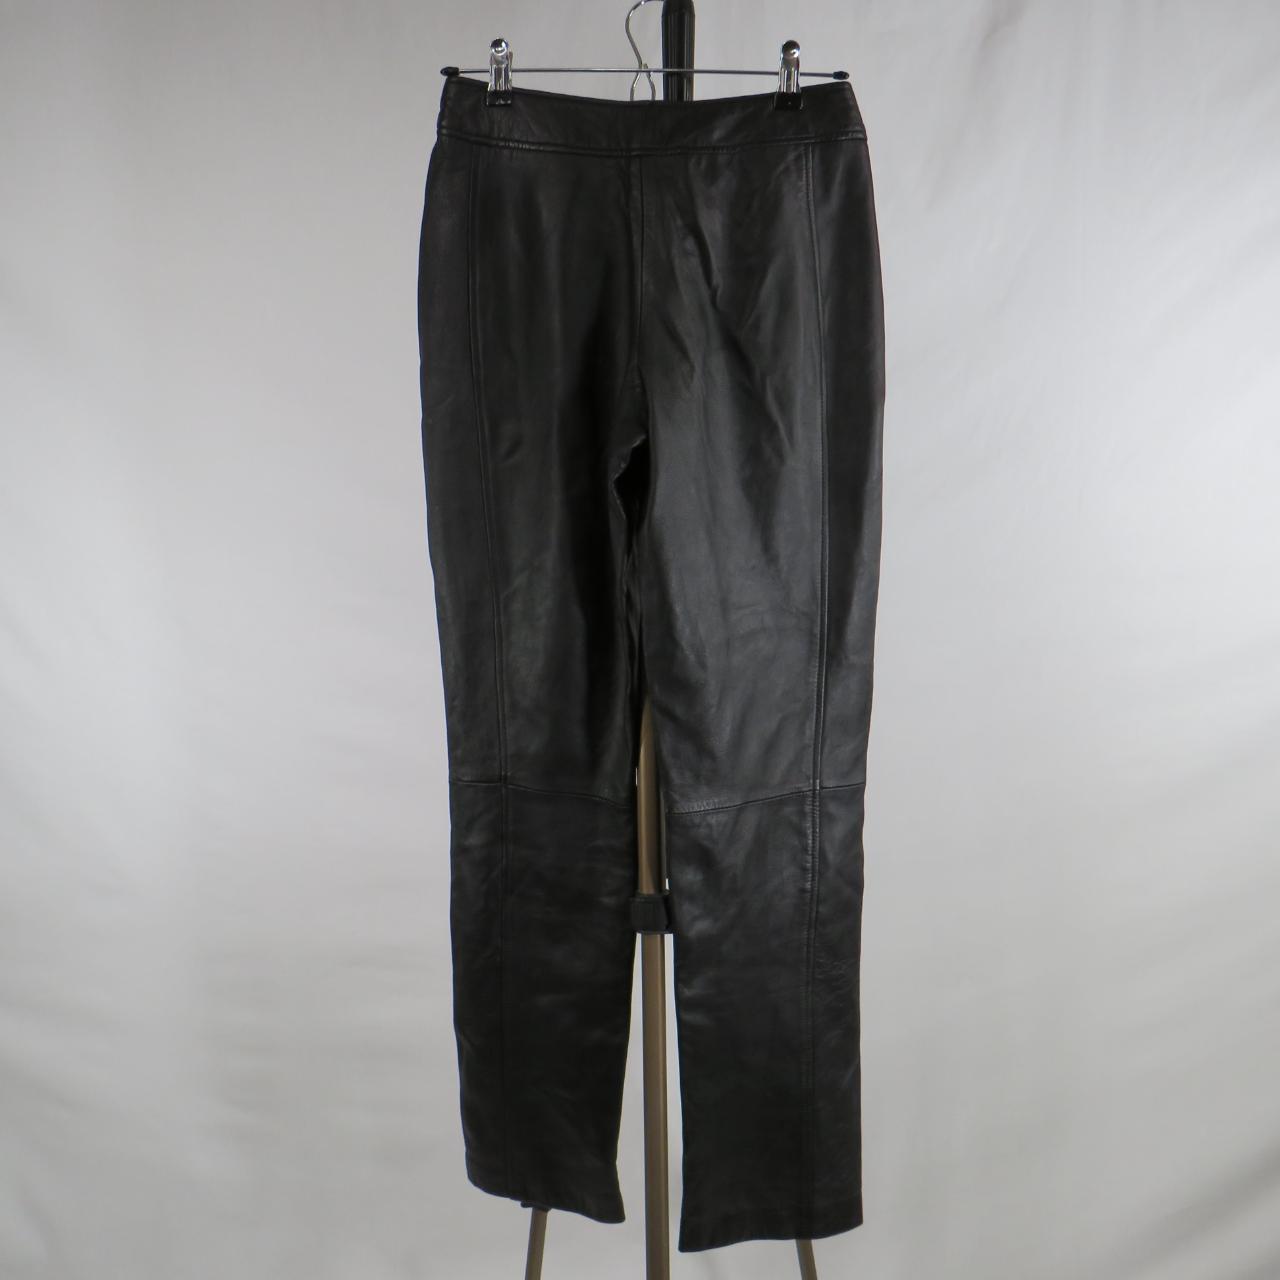 Rampage black leather mid-rise pants. Soft lambskin.... - Depop